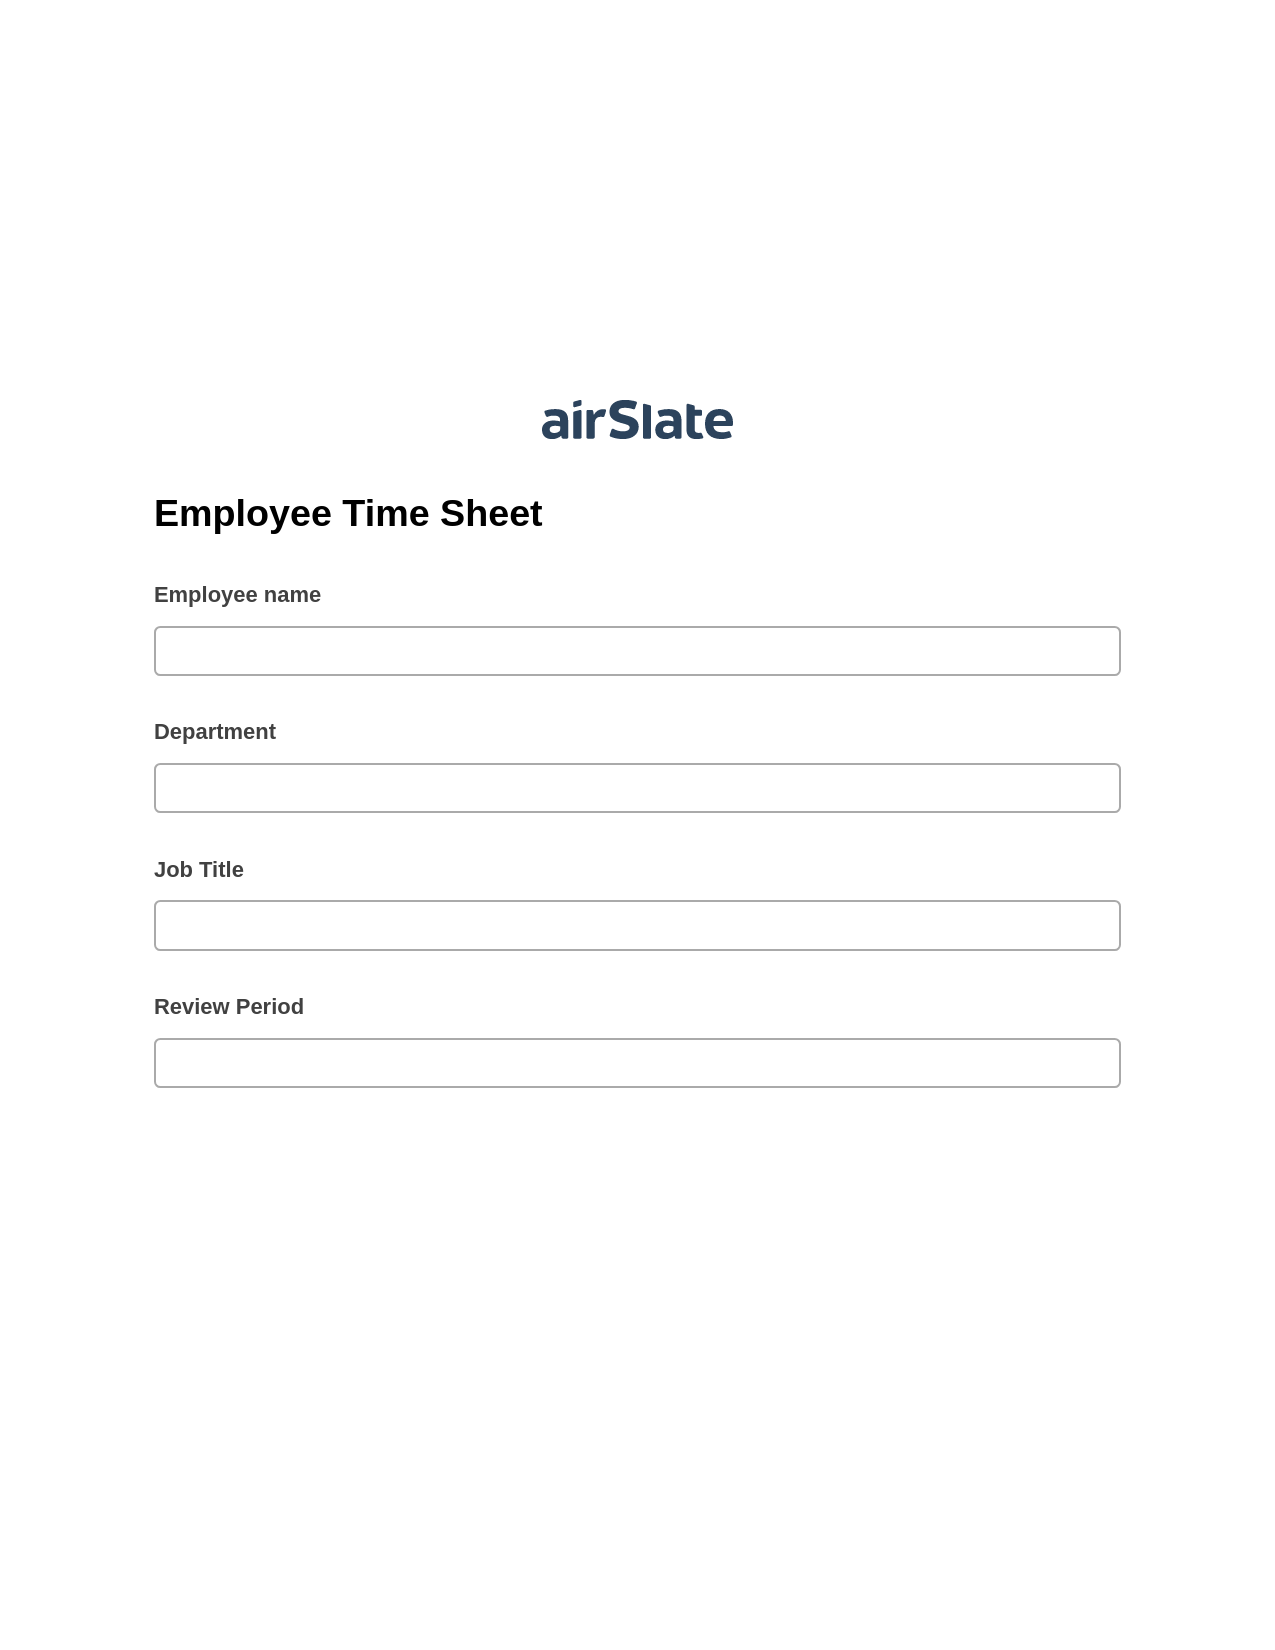 Employee Time Sheet System Bot - Slack Two-Way Binding Bot, Remove Slate Bot, Export to Excel 365 Bot